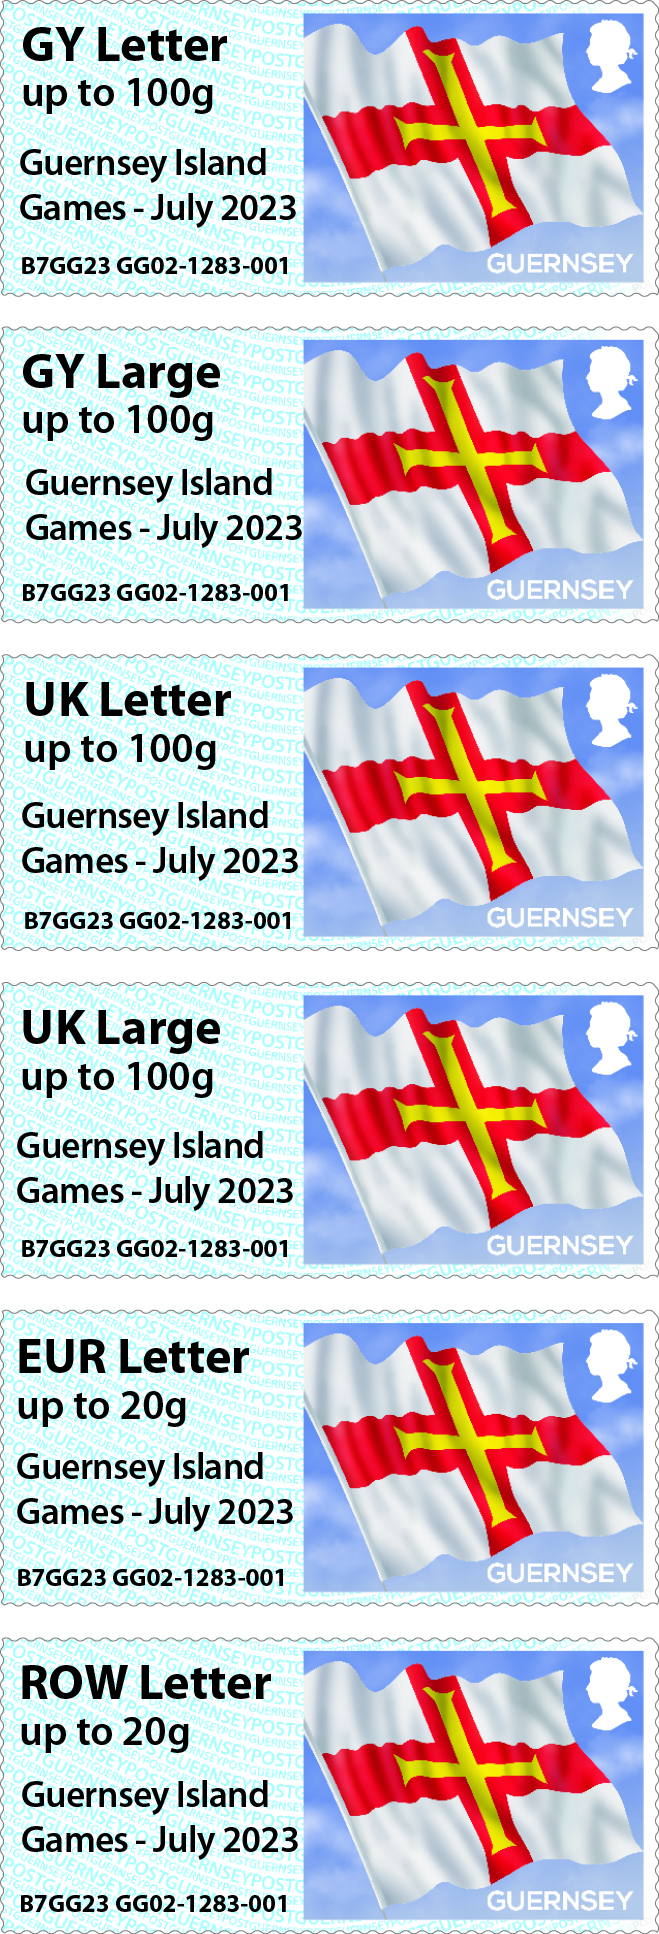 Guernsey celebrate the 2023 Guernsey Island Games